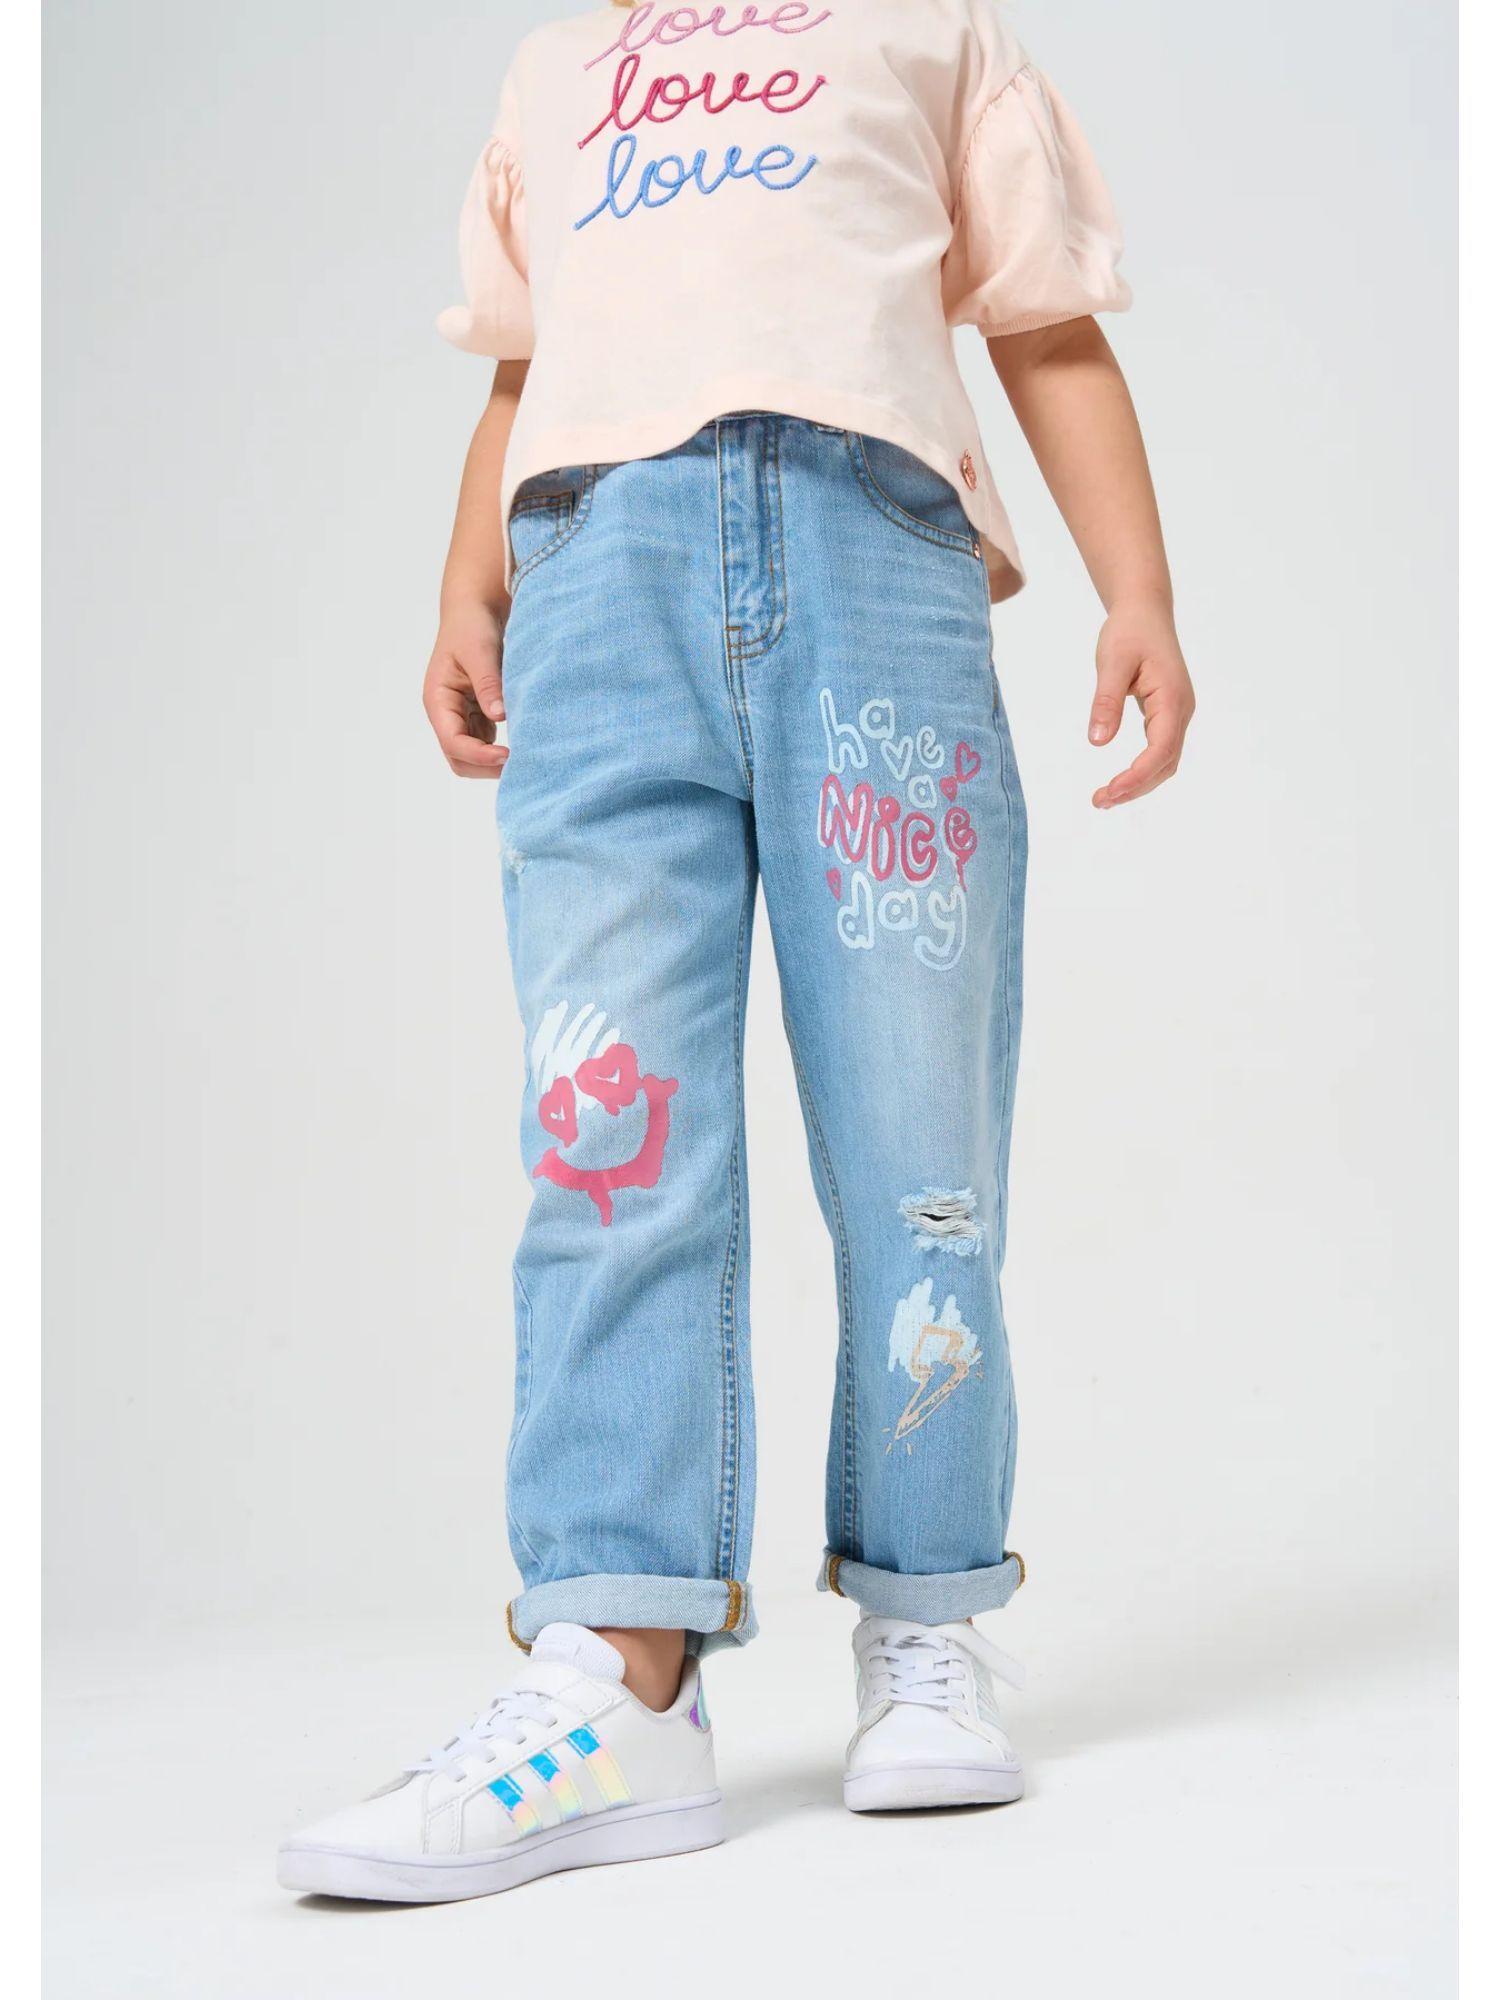 mollie graffiti art jeans